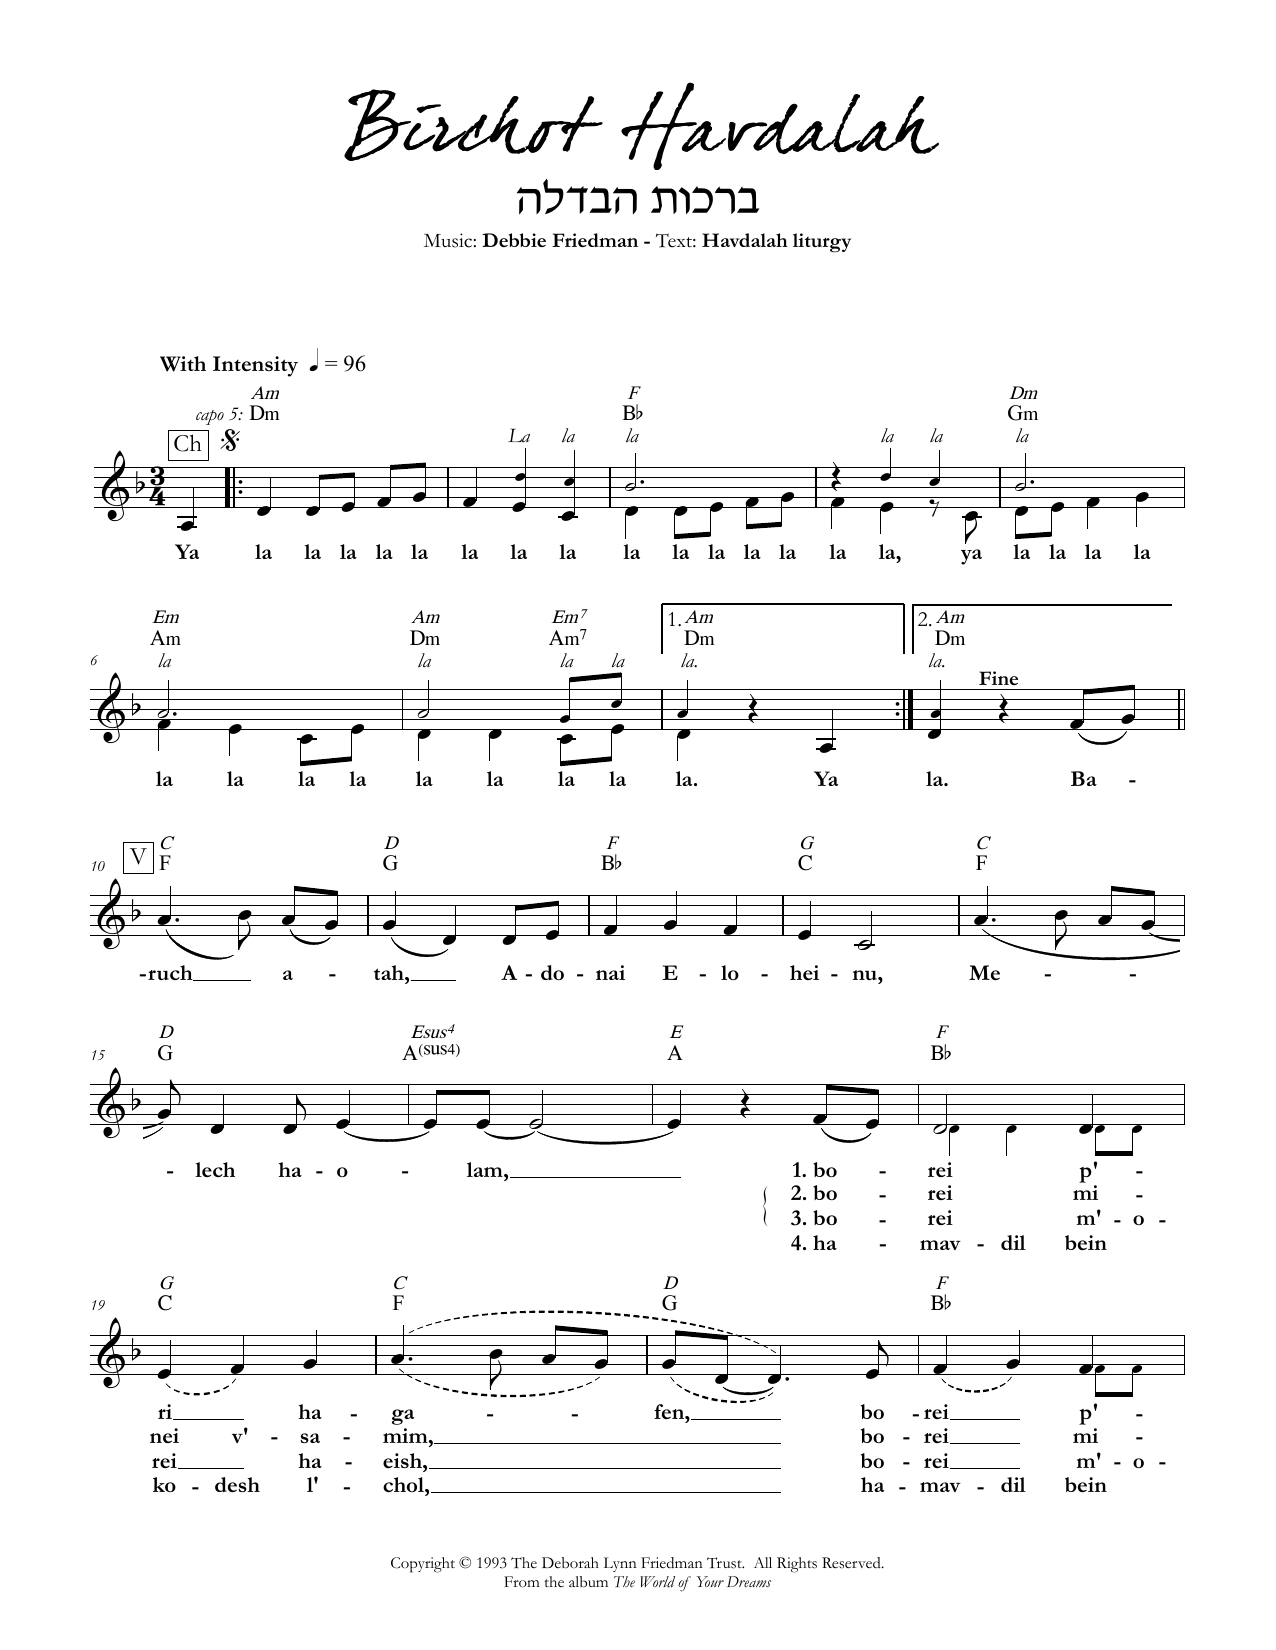 Download Debbie Friedman Birchot Havdalah Sheet Music and learn how to play Lead Sheet / Fake Book PDF digital score in minutes